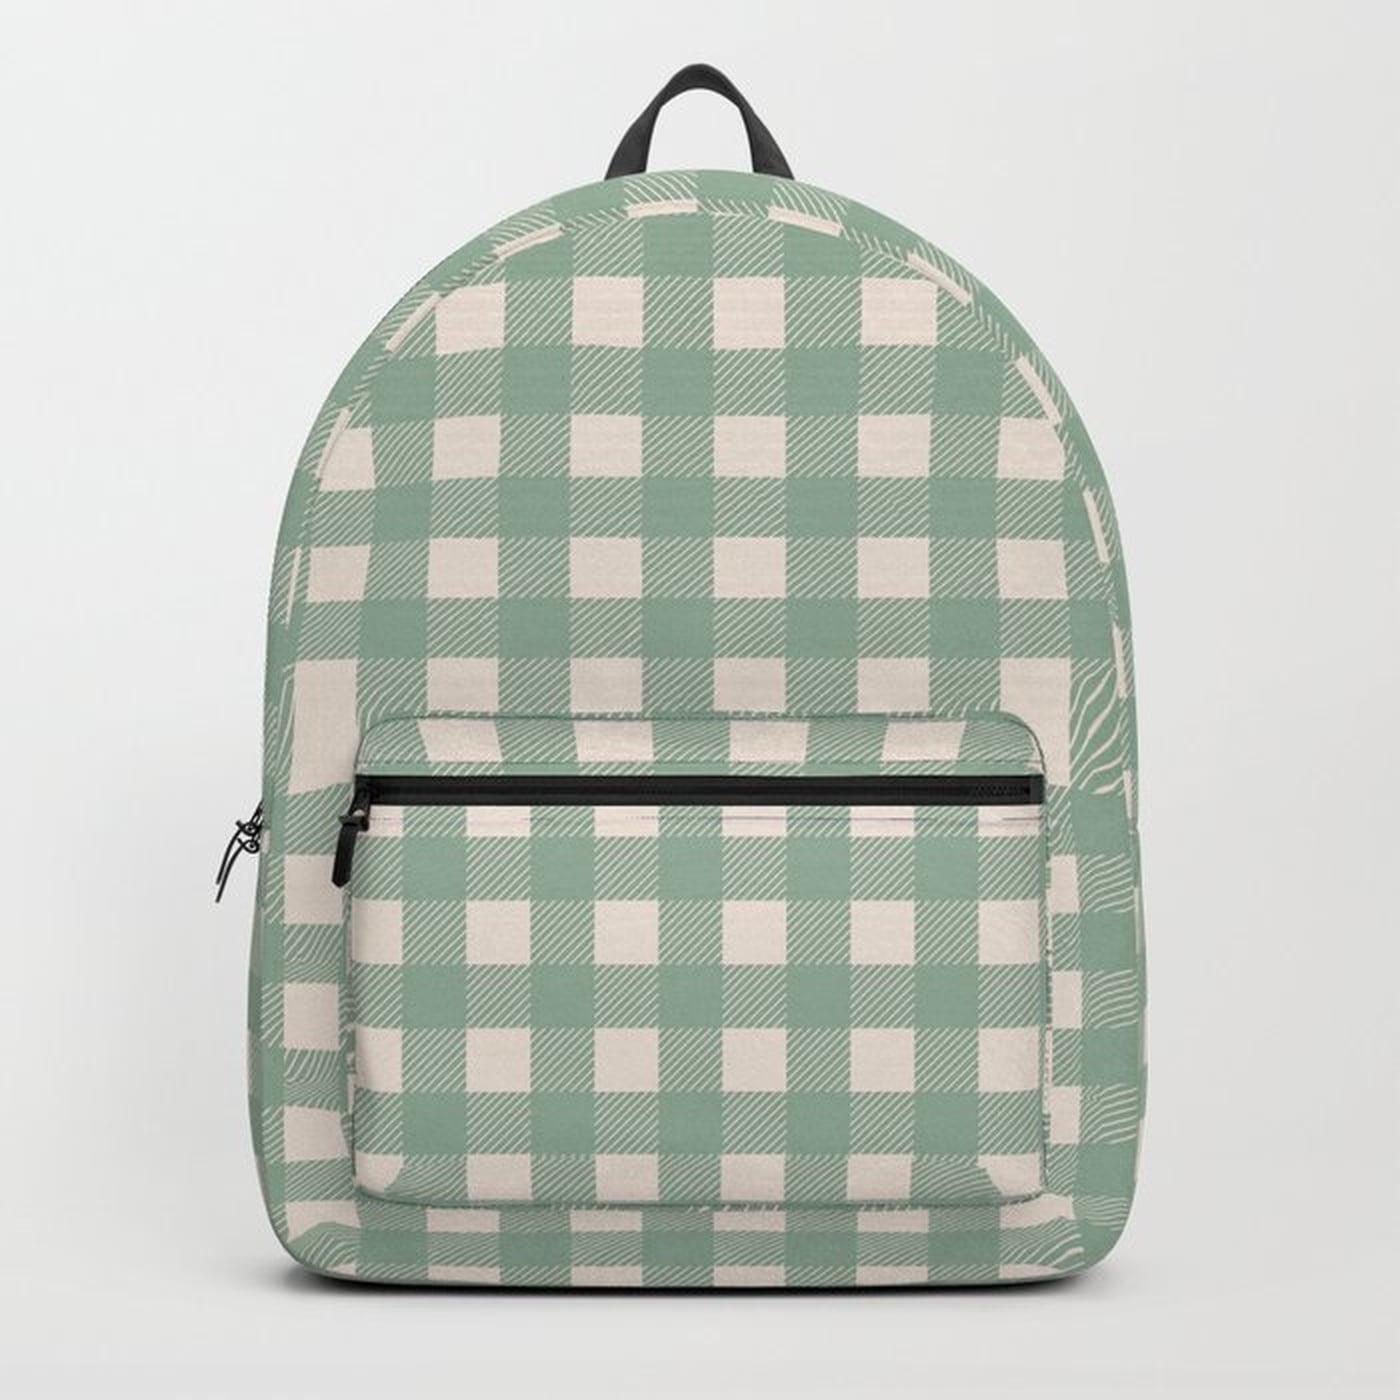 Cute Backpacks | POPSUGAR Fashion